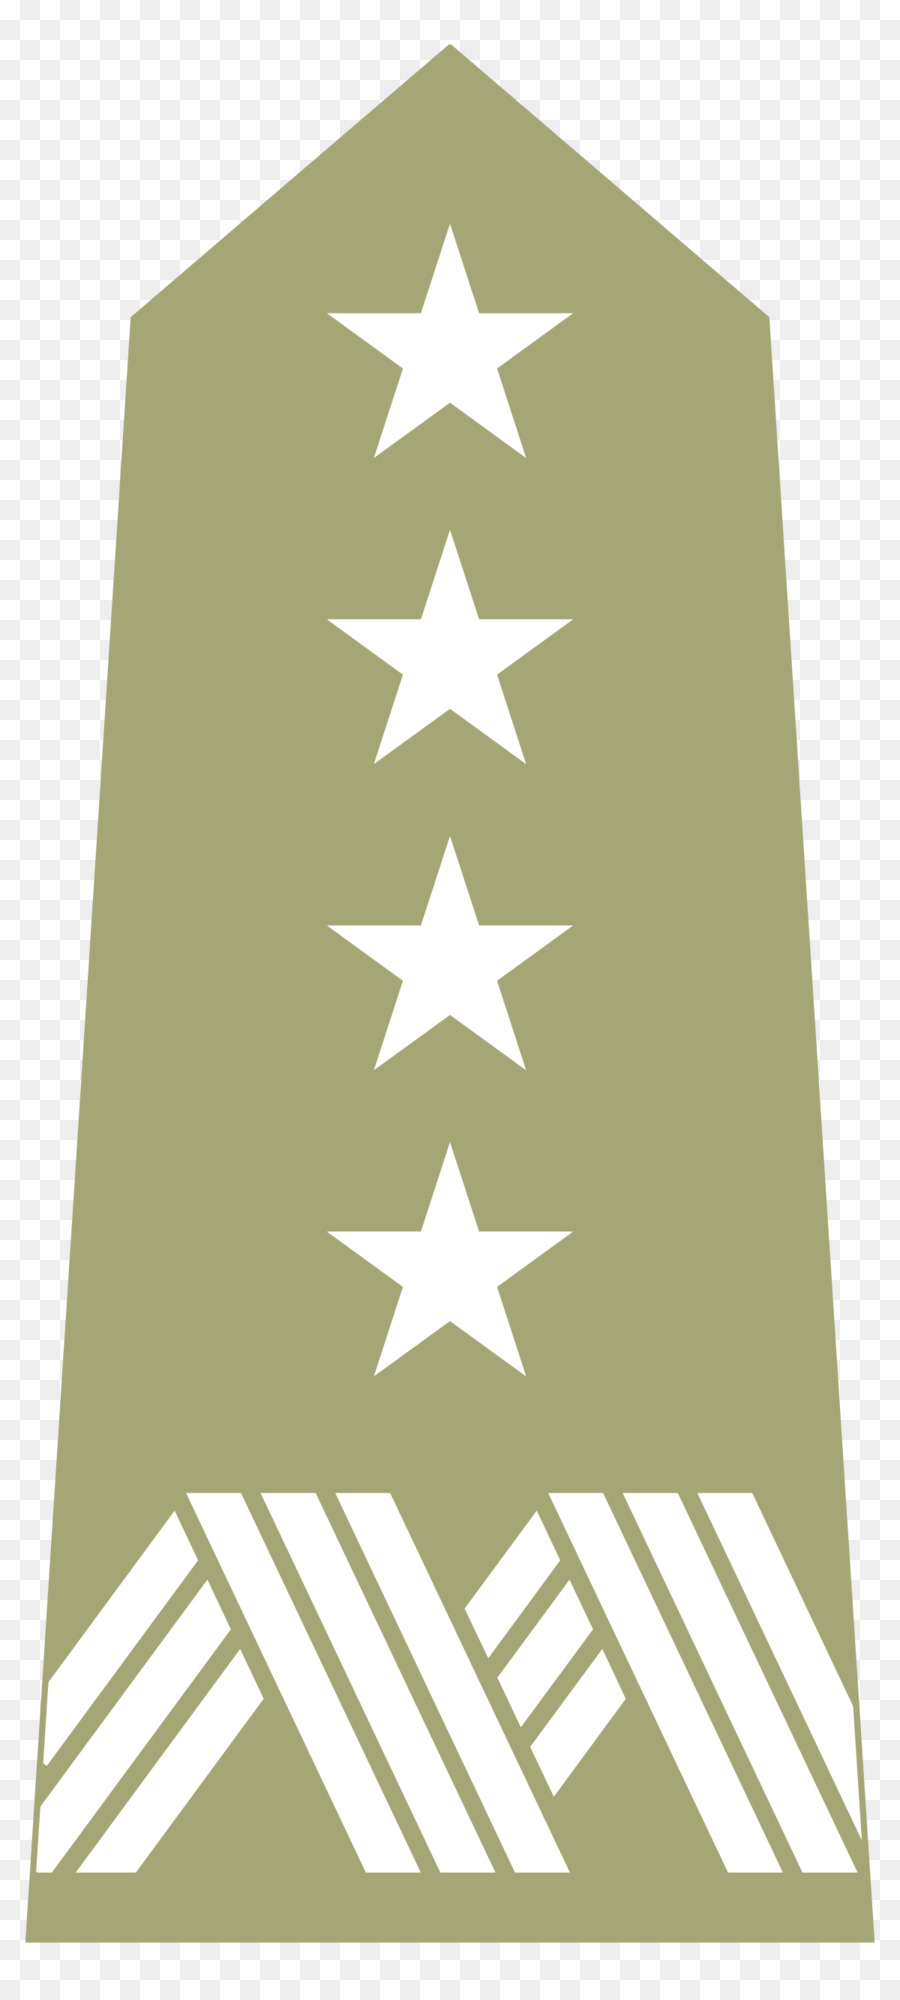 Tenente generale Brigadier general Four-star Military rank rank - generale